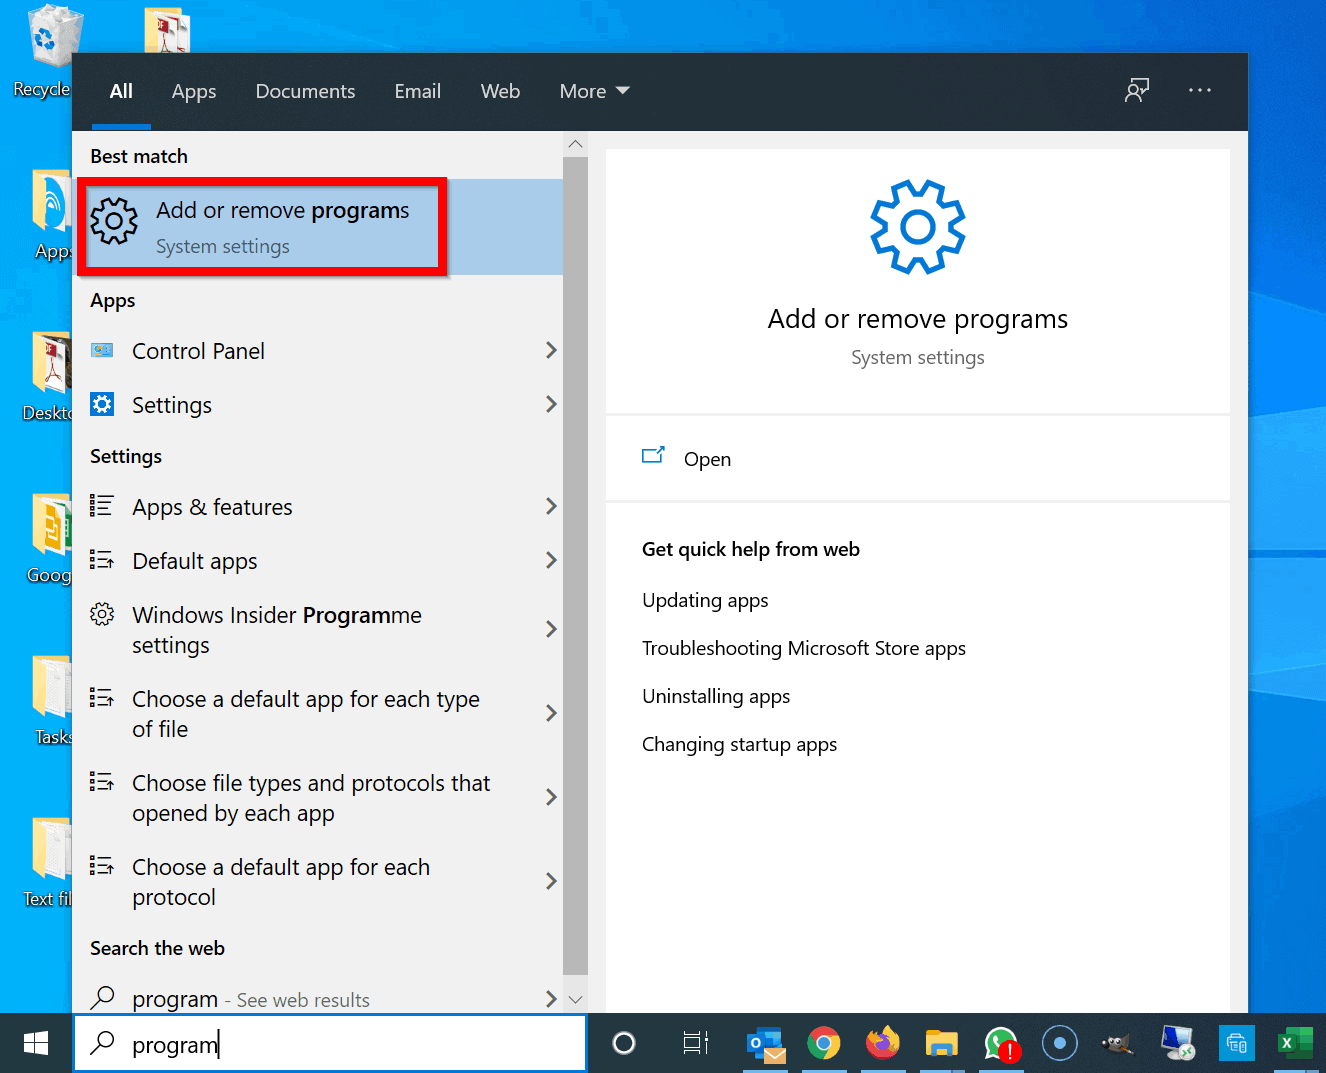 how to use google drive on windows 10